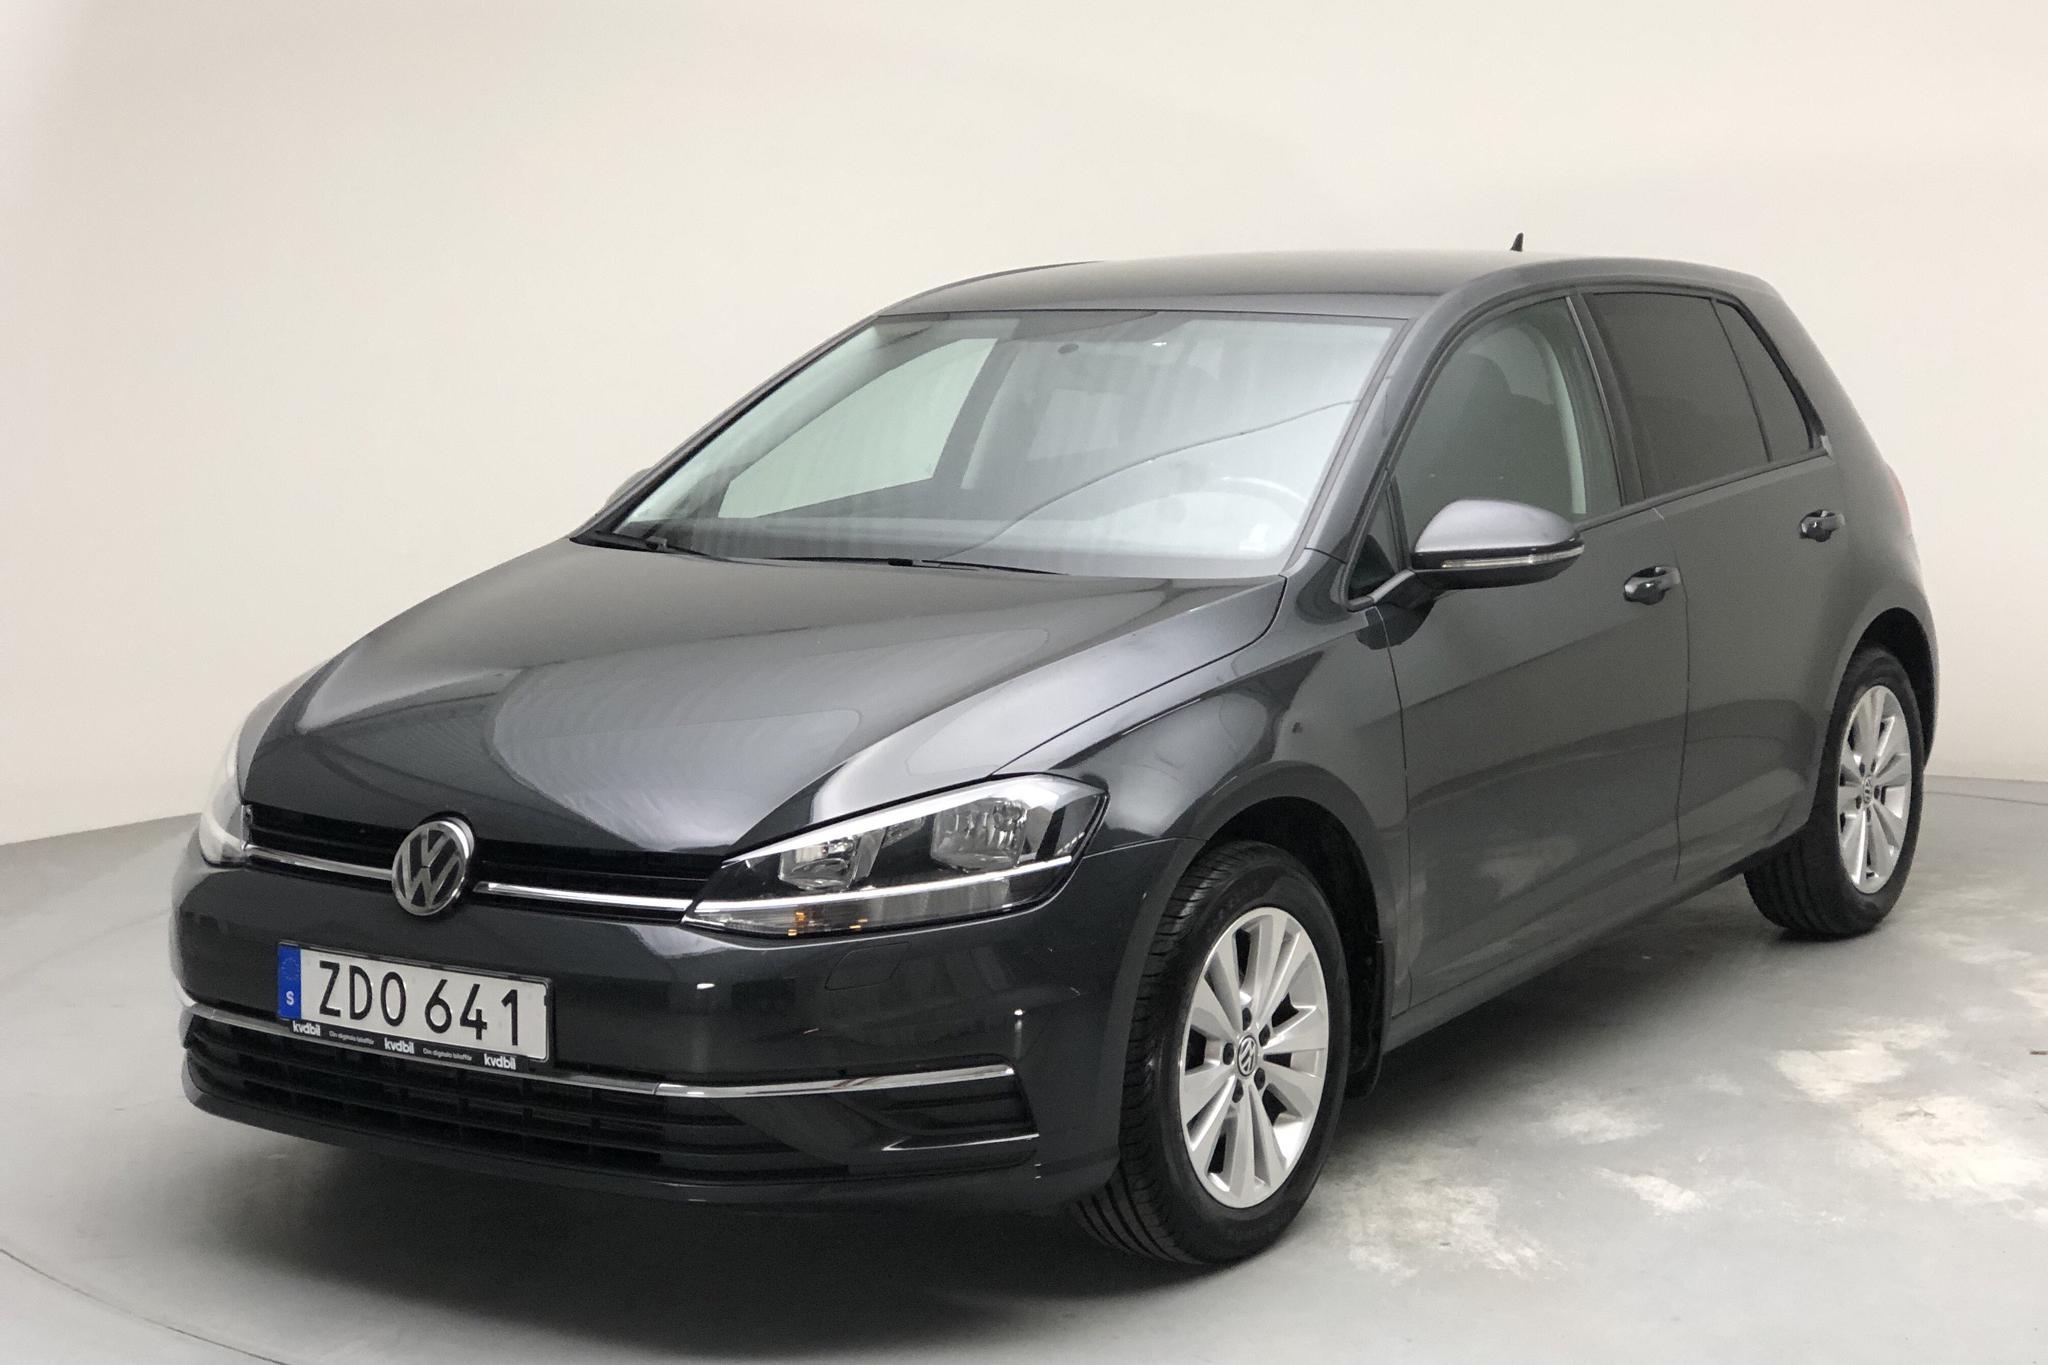 VW Golf VII 1.0 TSI 5dr (110hk) - 5 701 mil - Manuell - Dark Grey - 2018